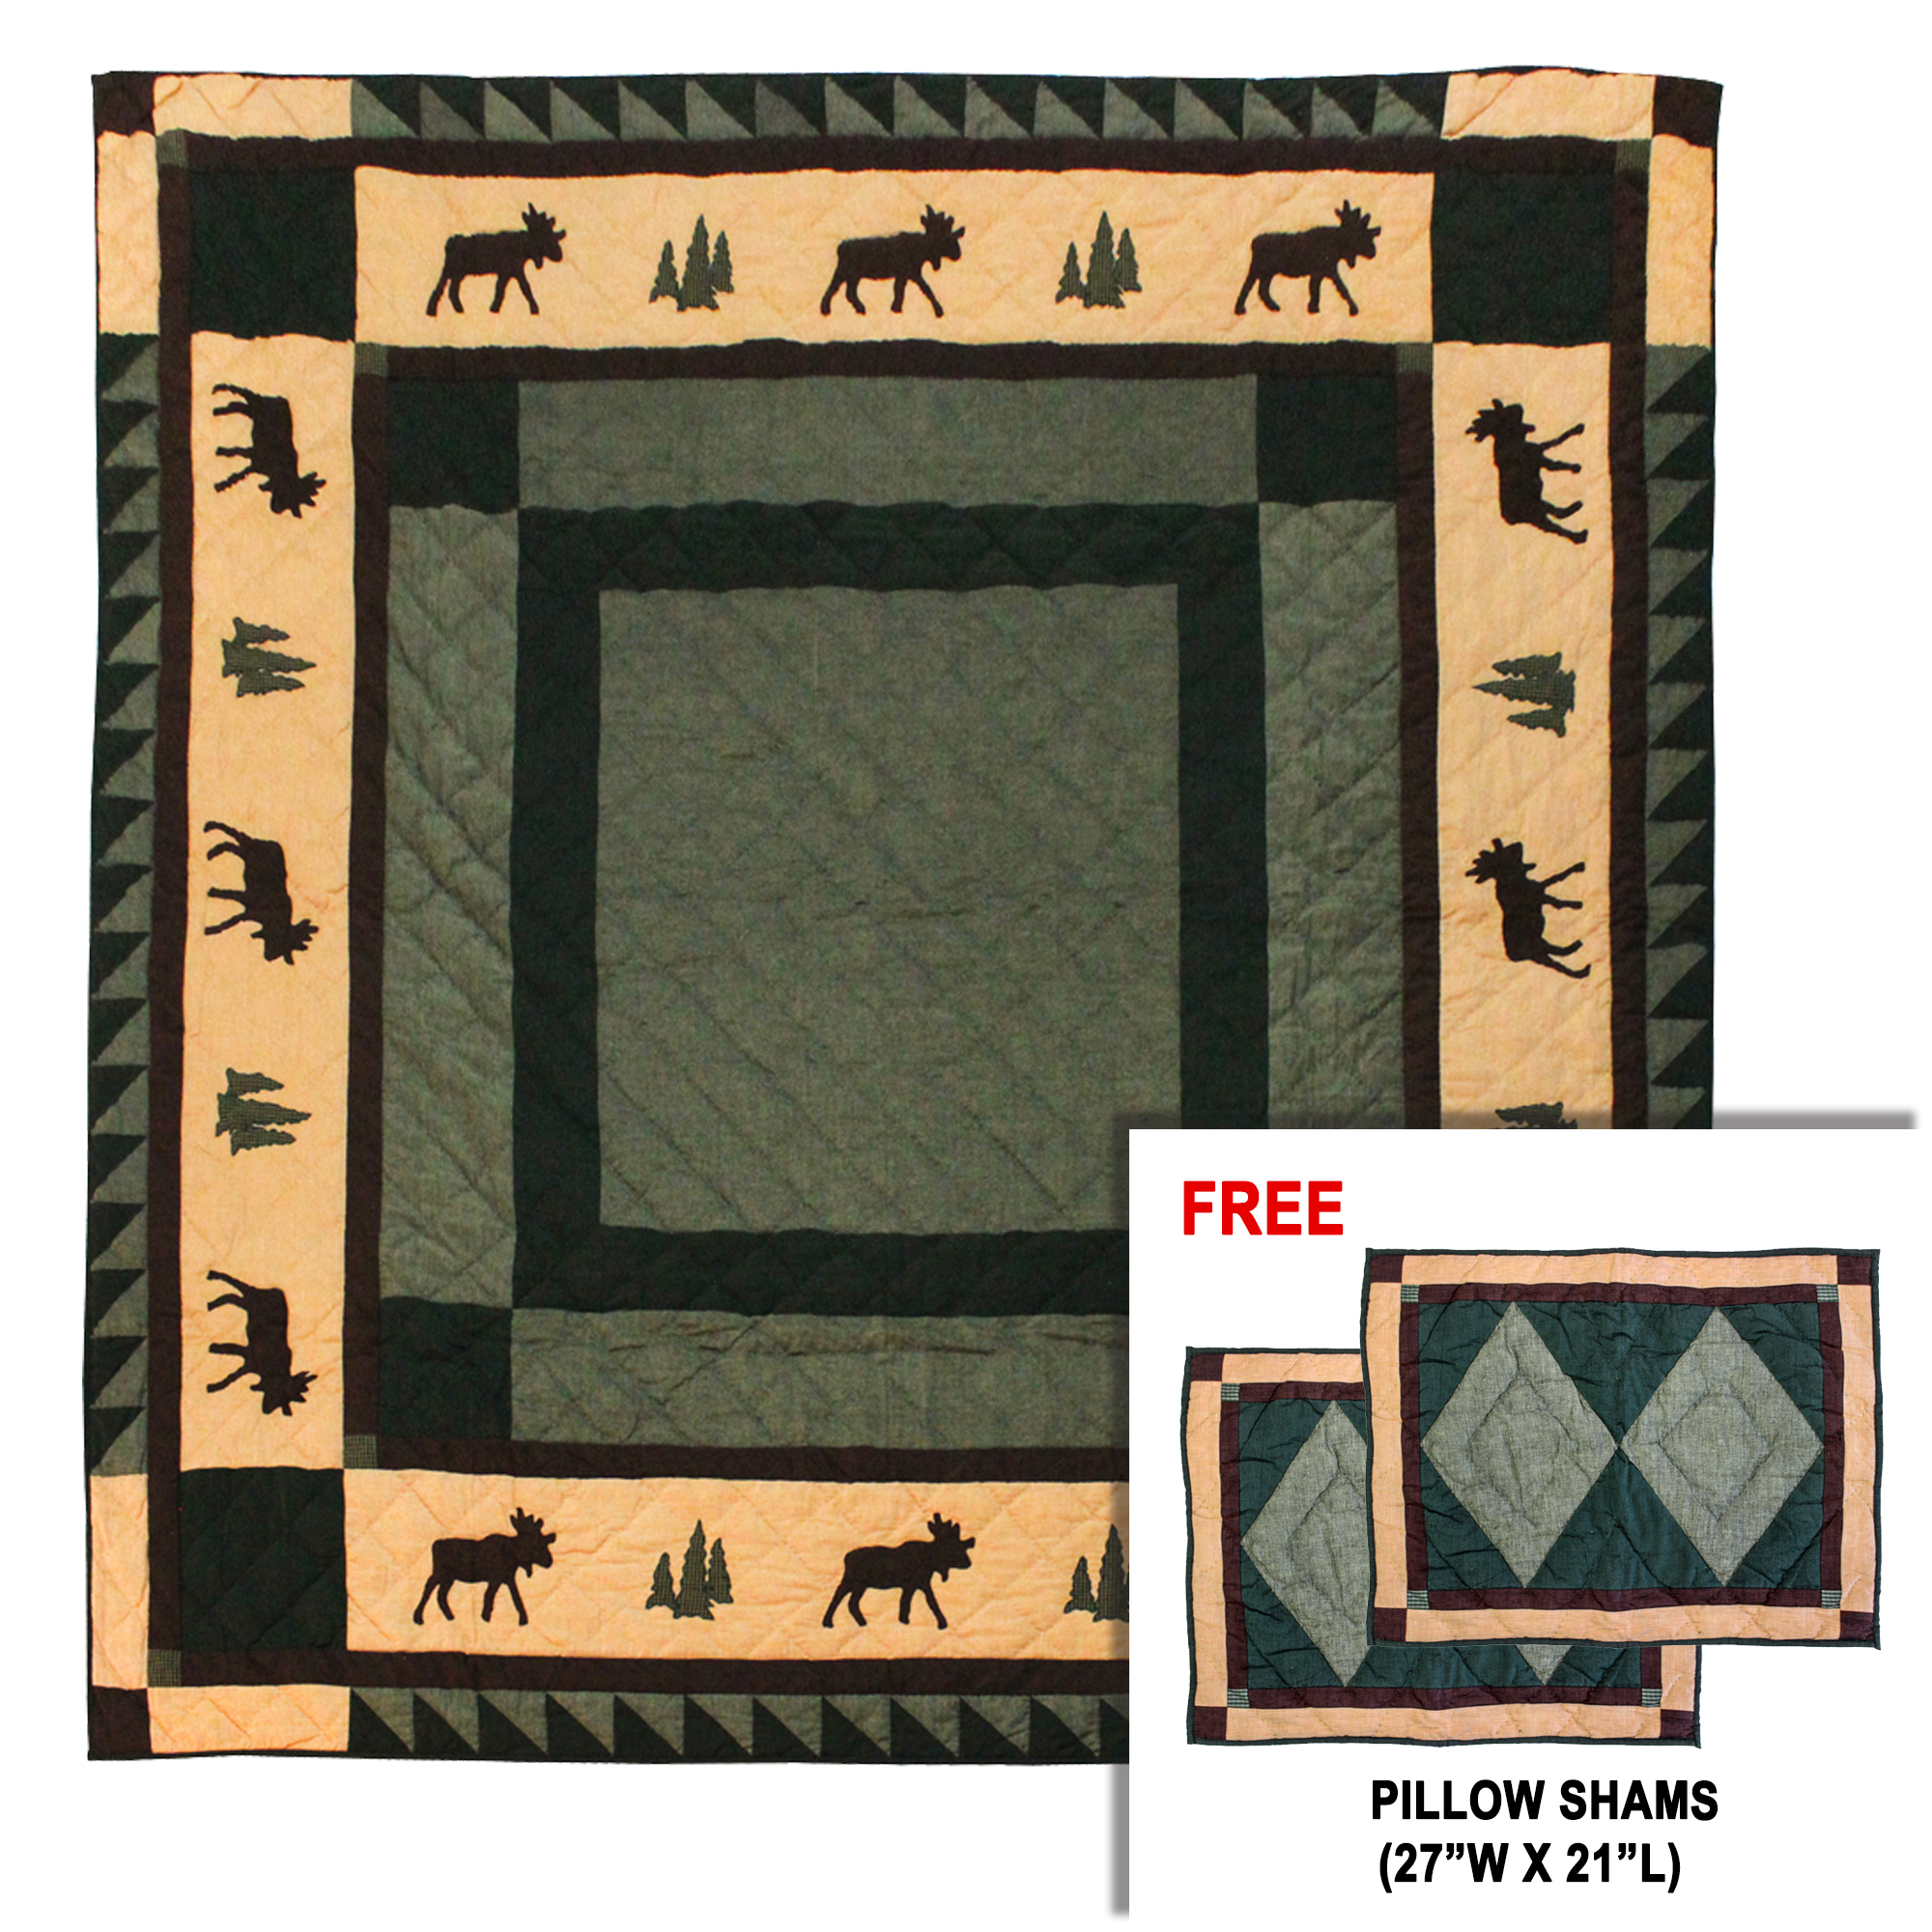 Cedar Trail King Quilt 105"W x 95"L | Buy a King Quilt and get a Matching Pillow Shams (27"W x 21"L) FREE